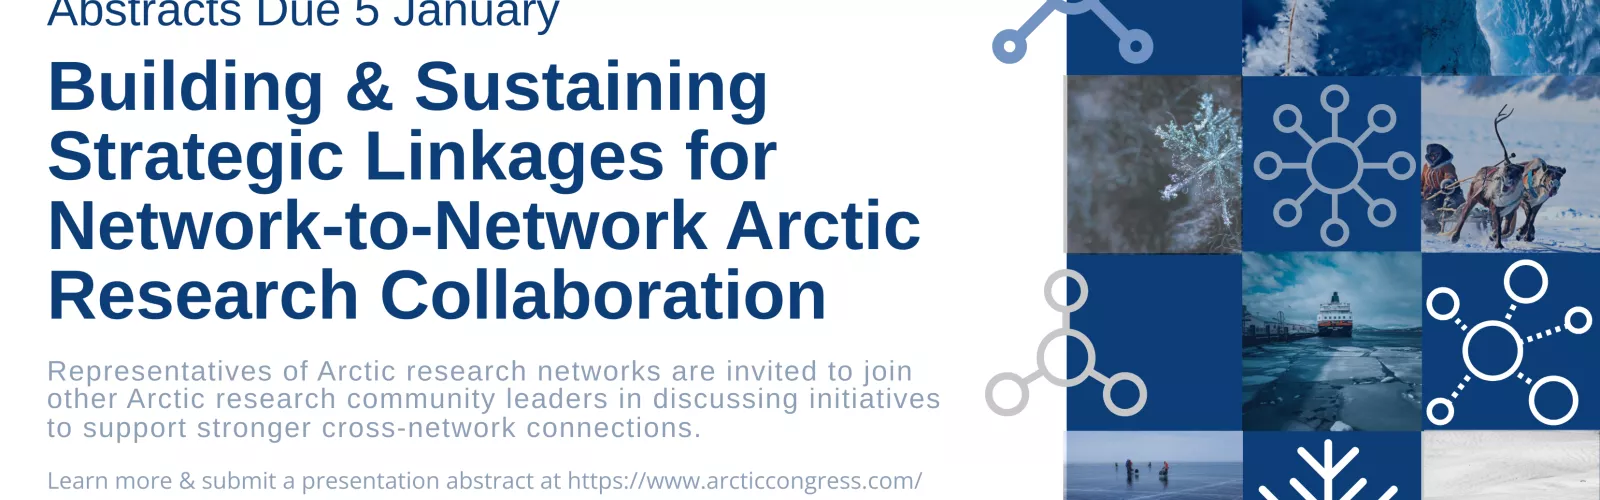 Arctic Congress Image